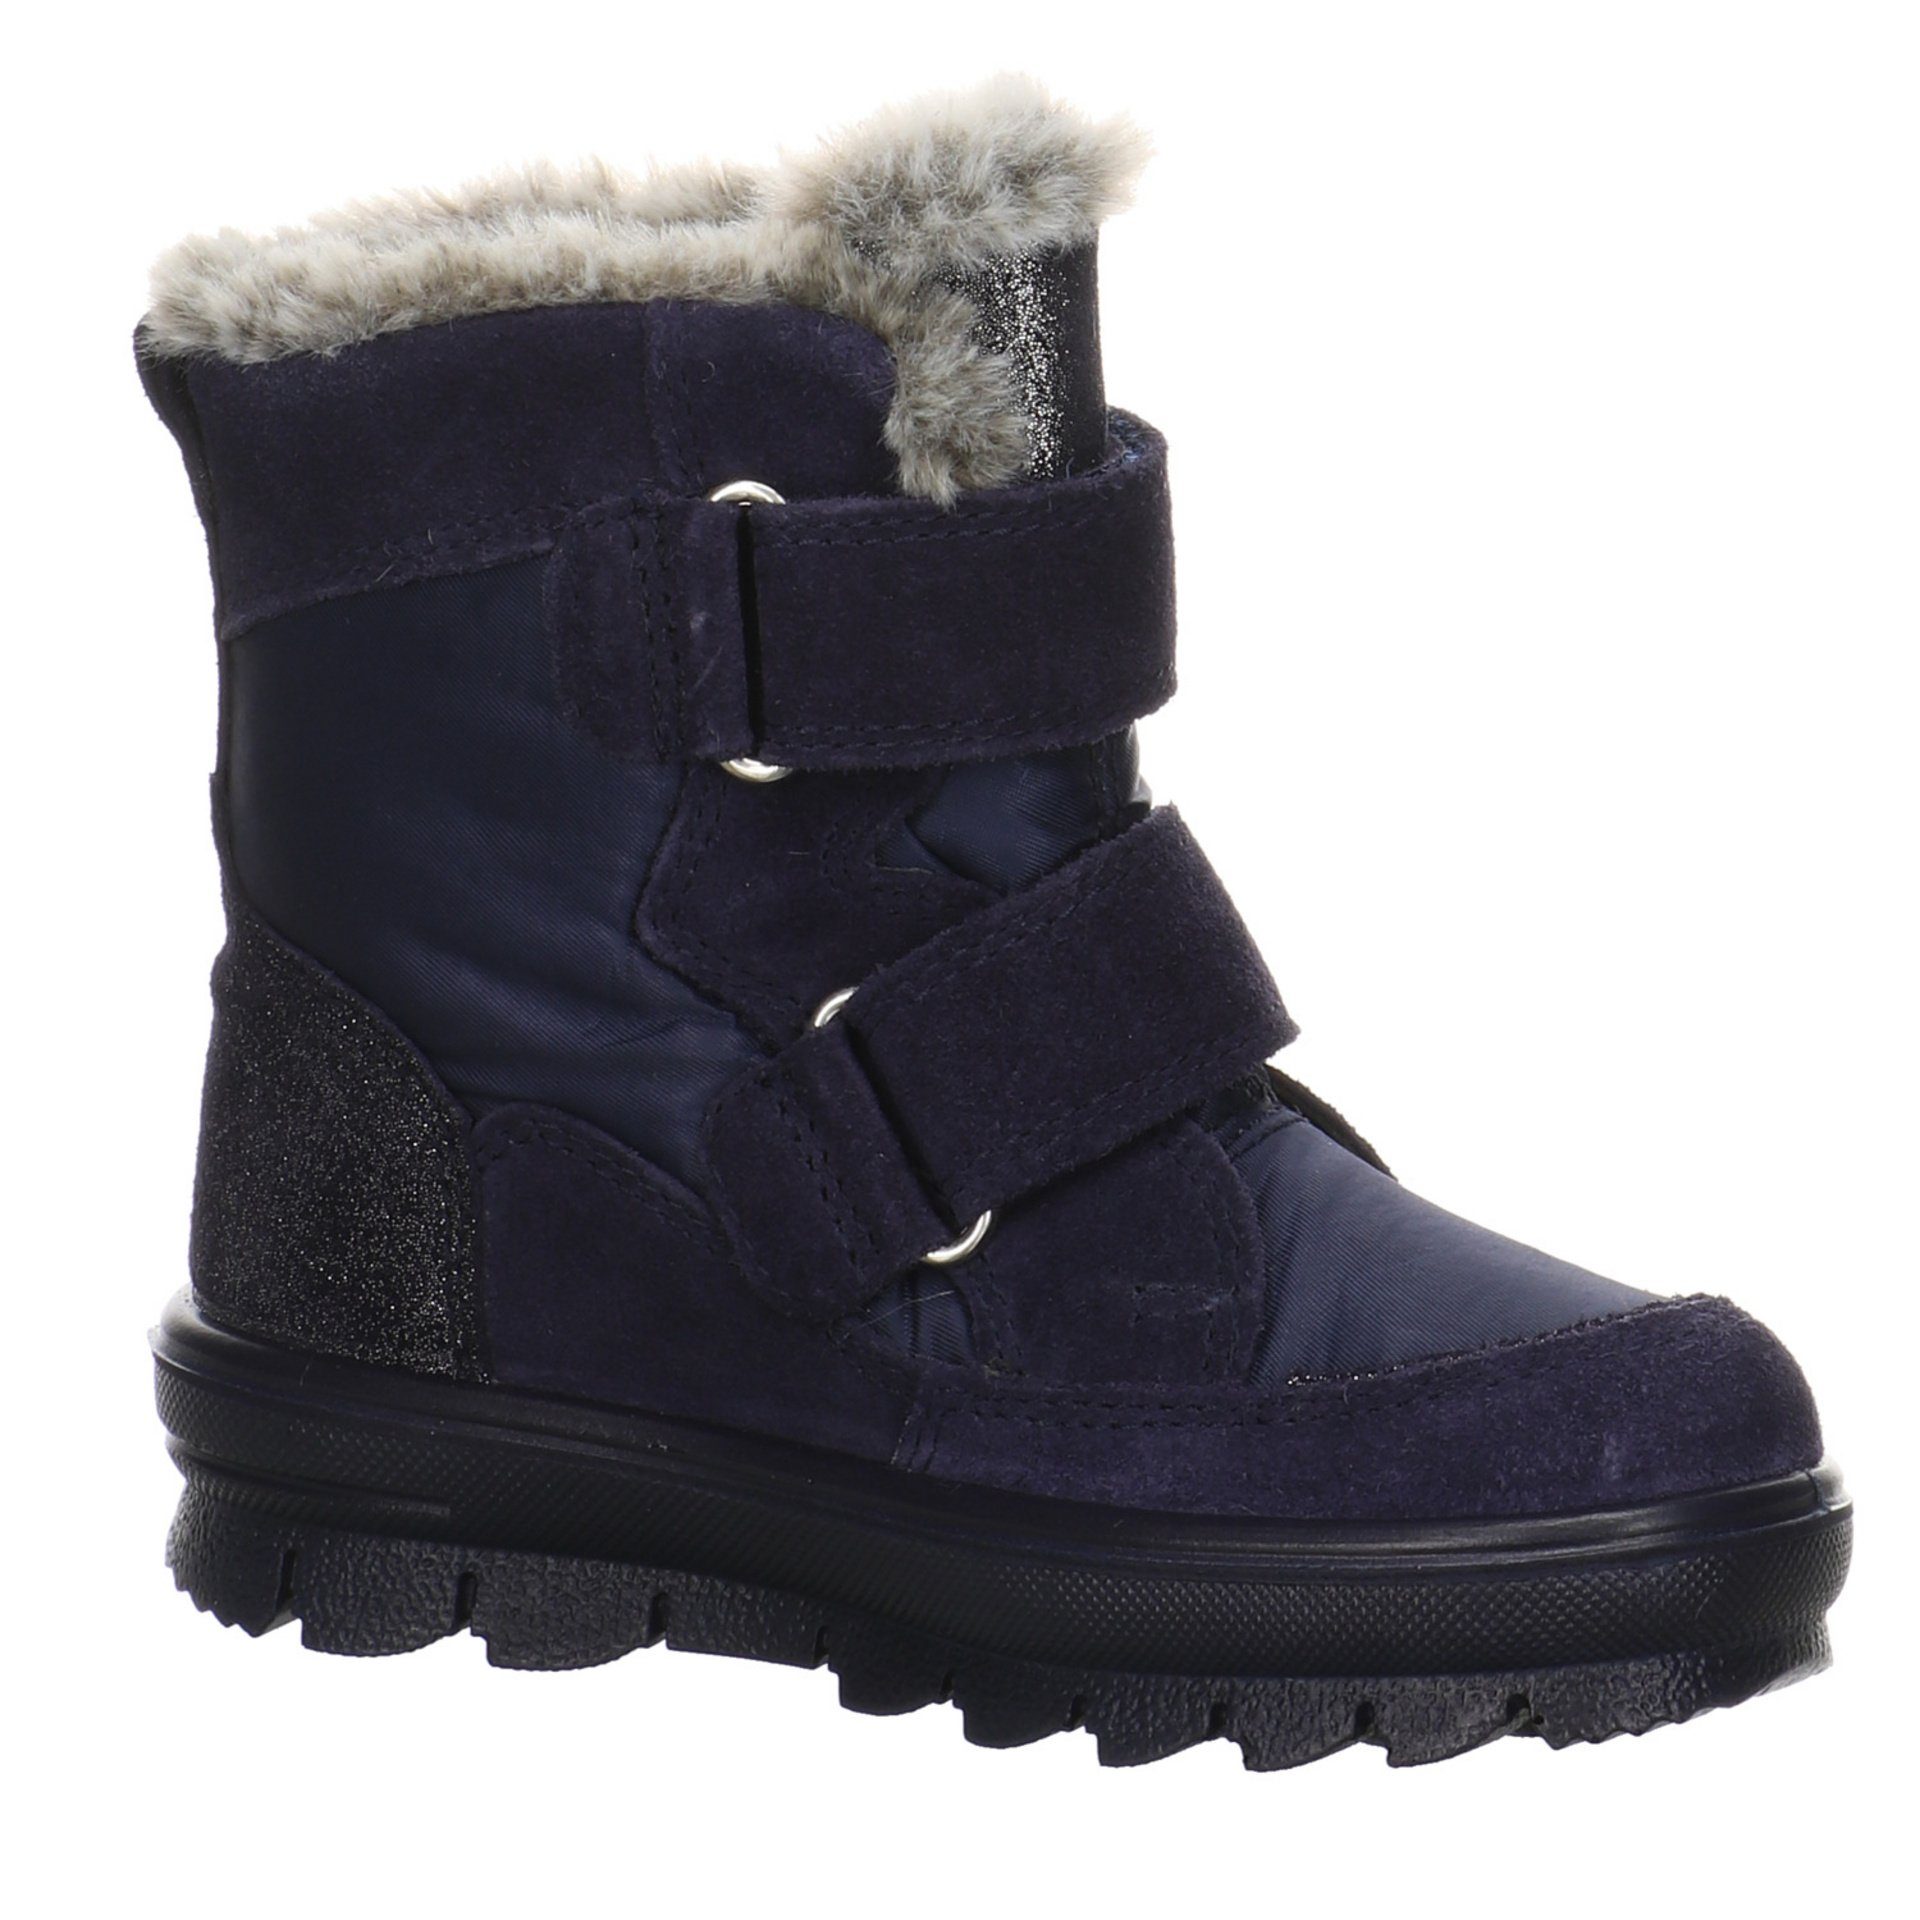 Superfit Flavia Boots blau Leder-/Textilkombination Leder-/Textilkombination uni Winterboots